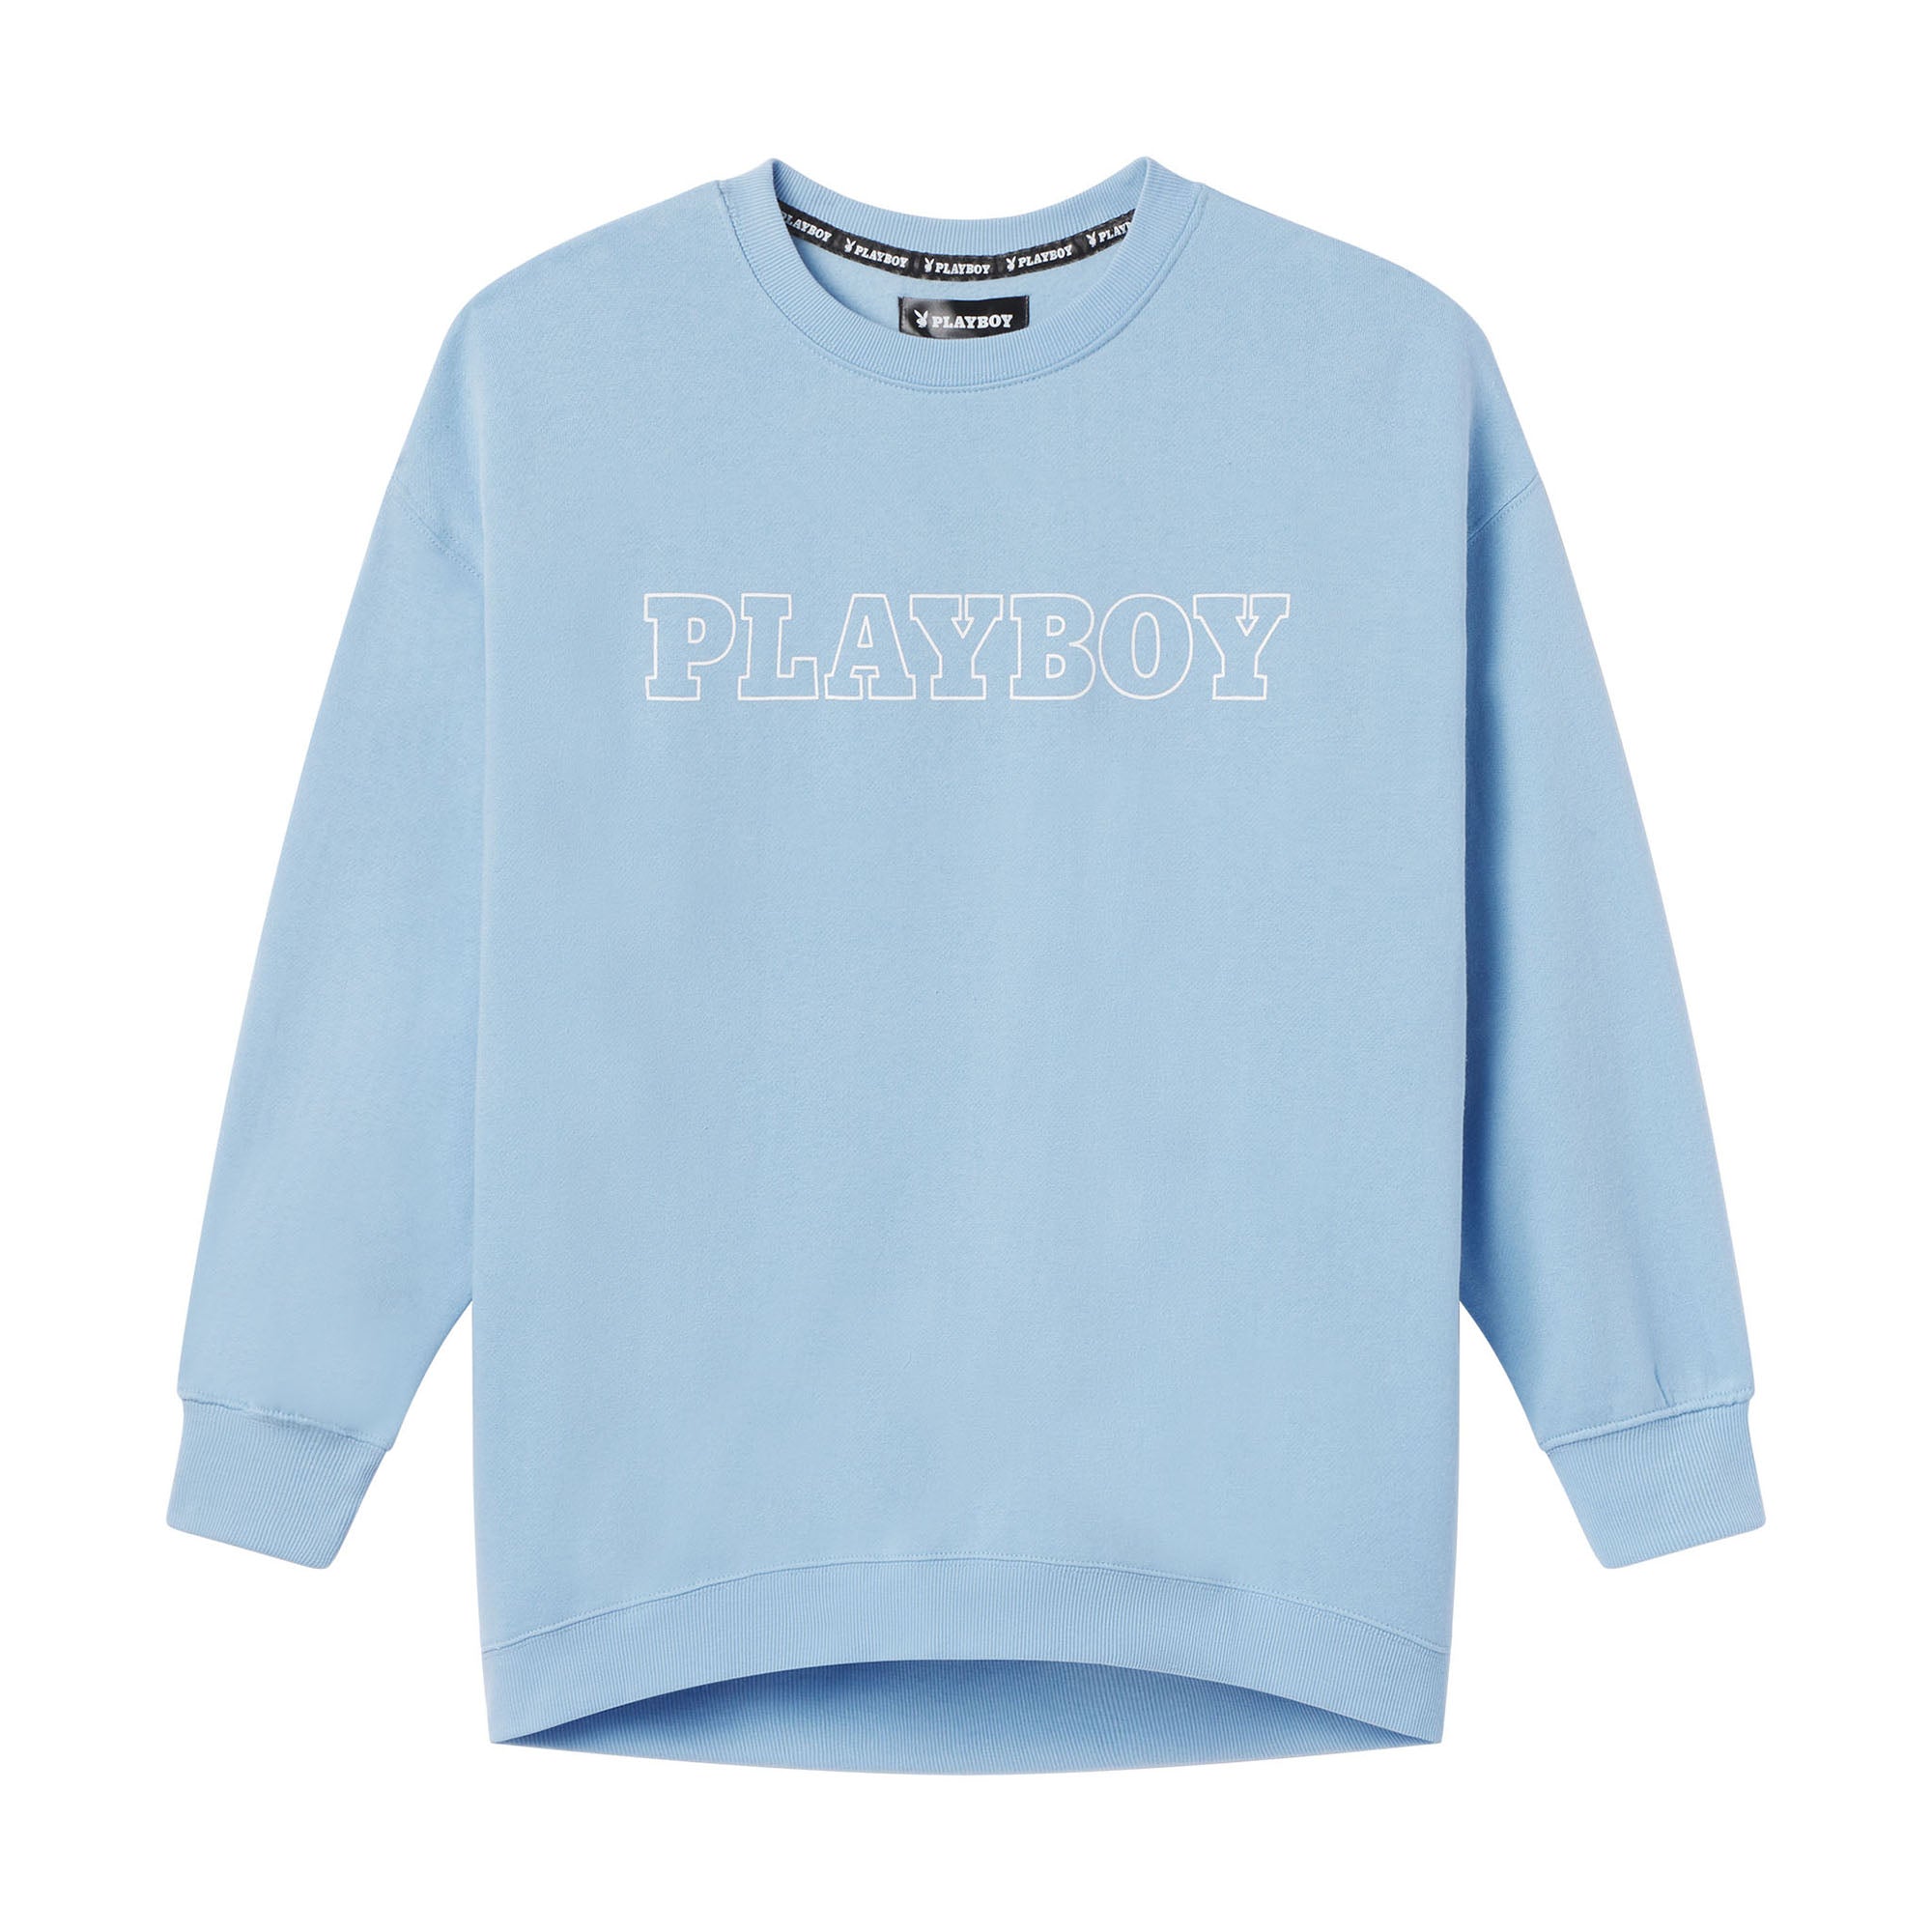 Playboy Sweatshirt - Mens | Crew Necks for Men from Playboy.com